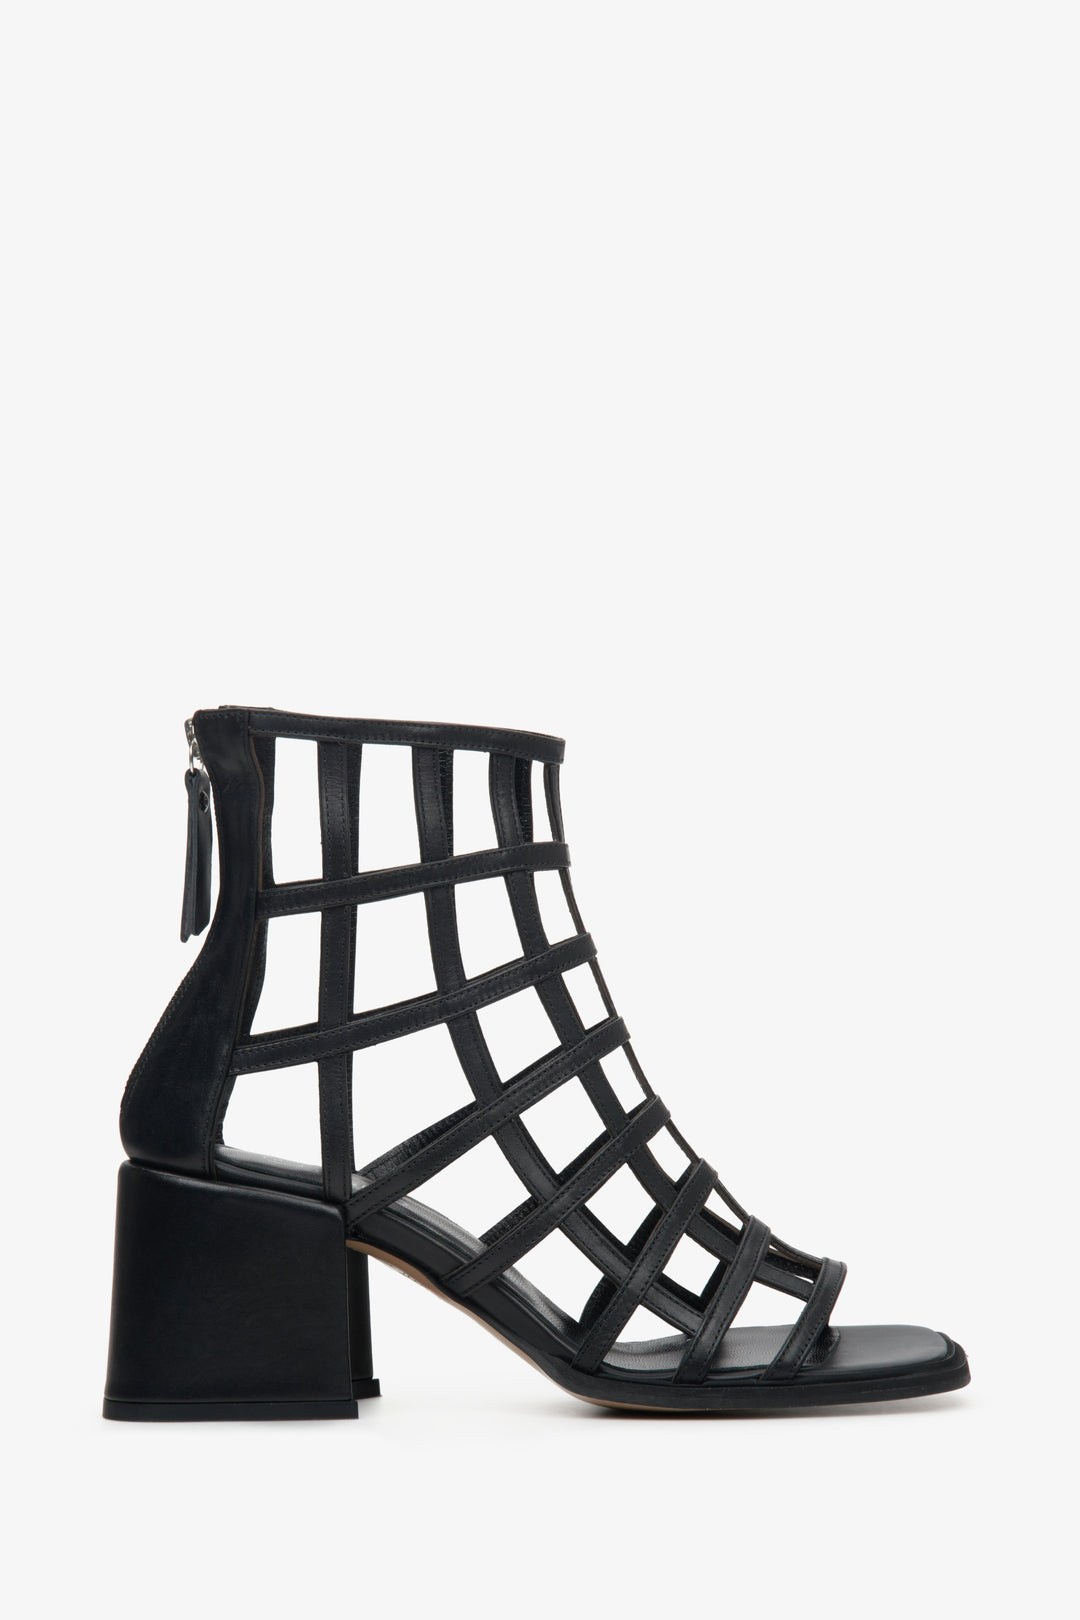 Black block heel women's sandals made of thin crossed straps.